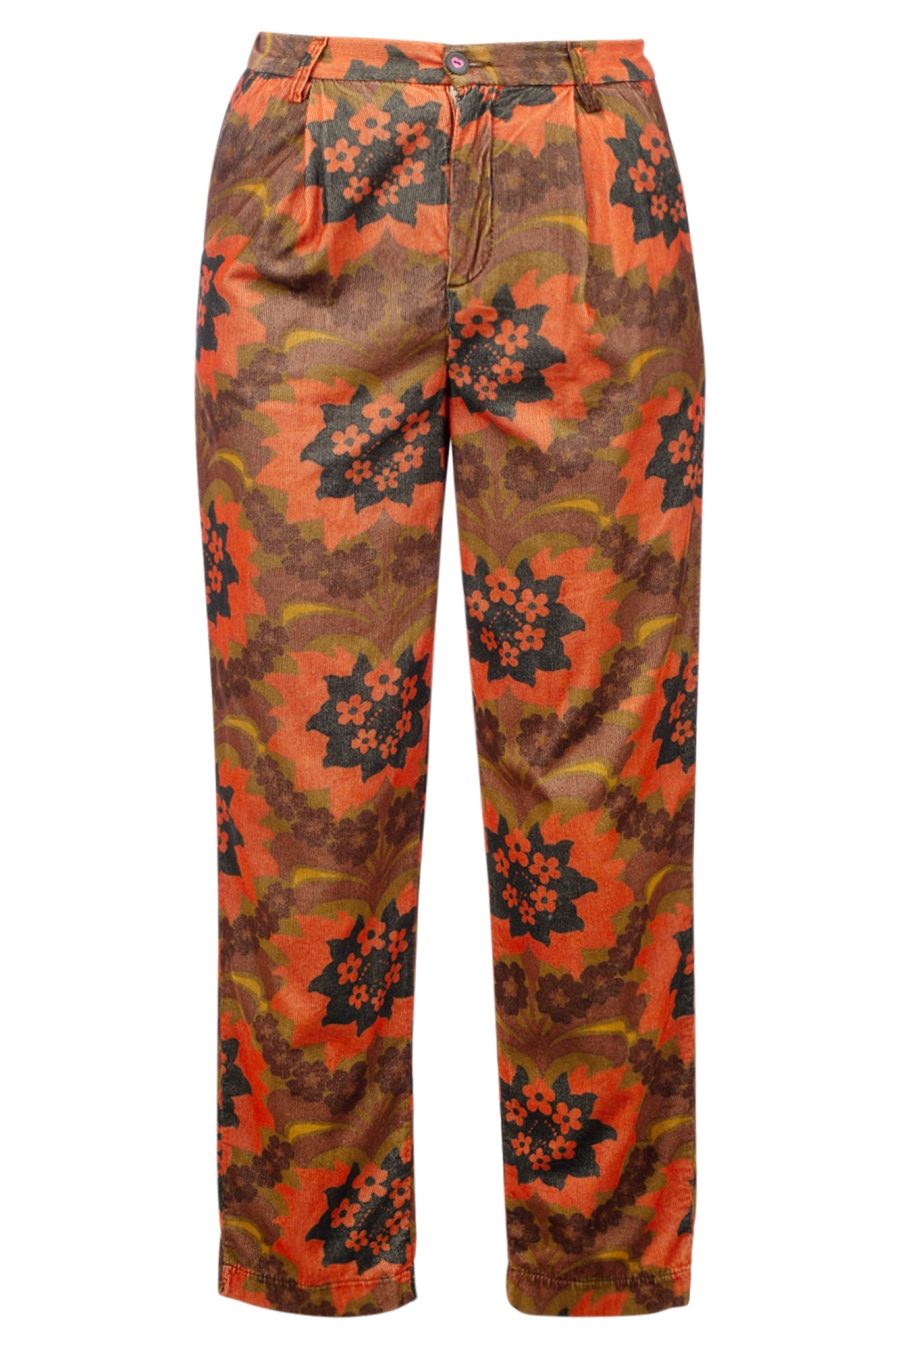 I Love My Pants - Trousers - 400080 - Orange Pattern